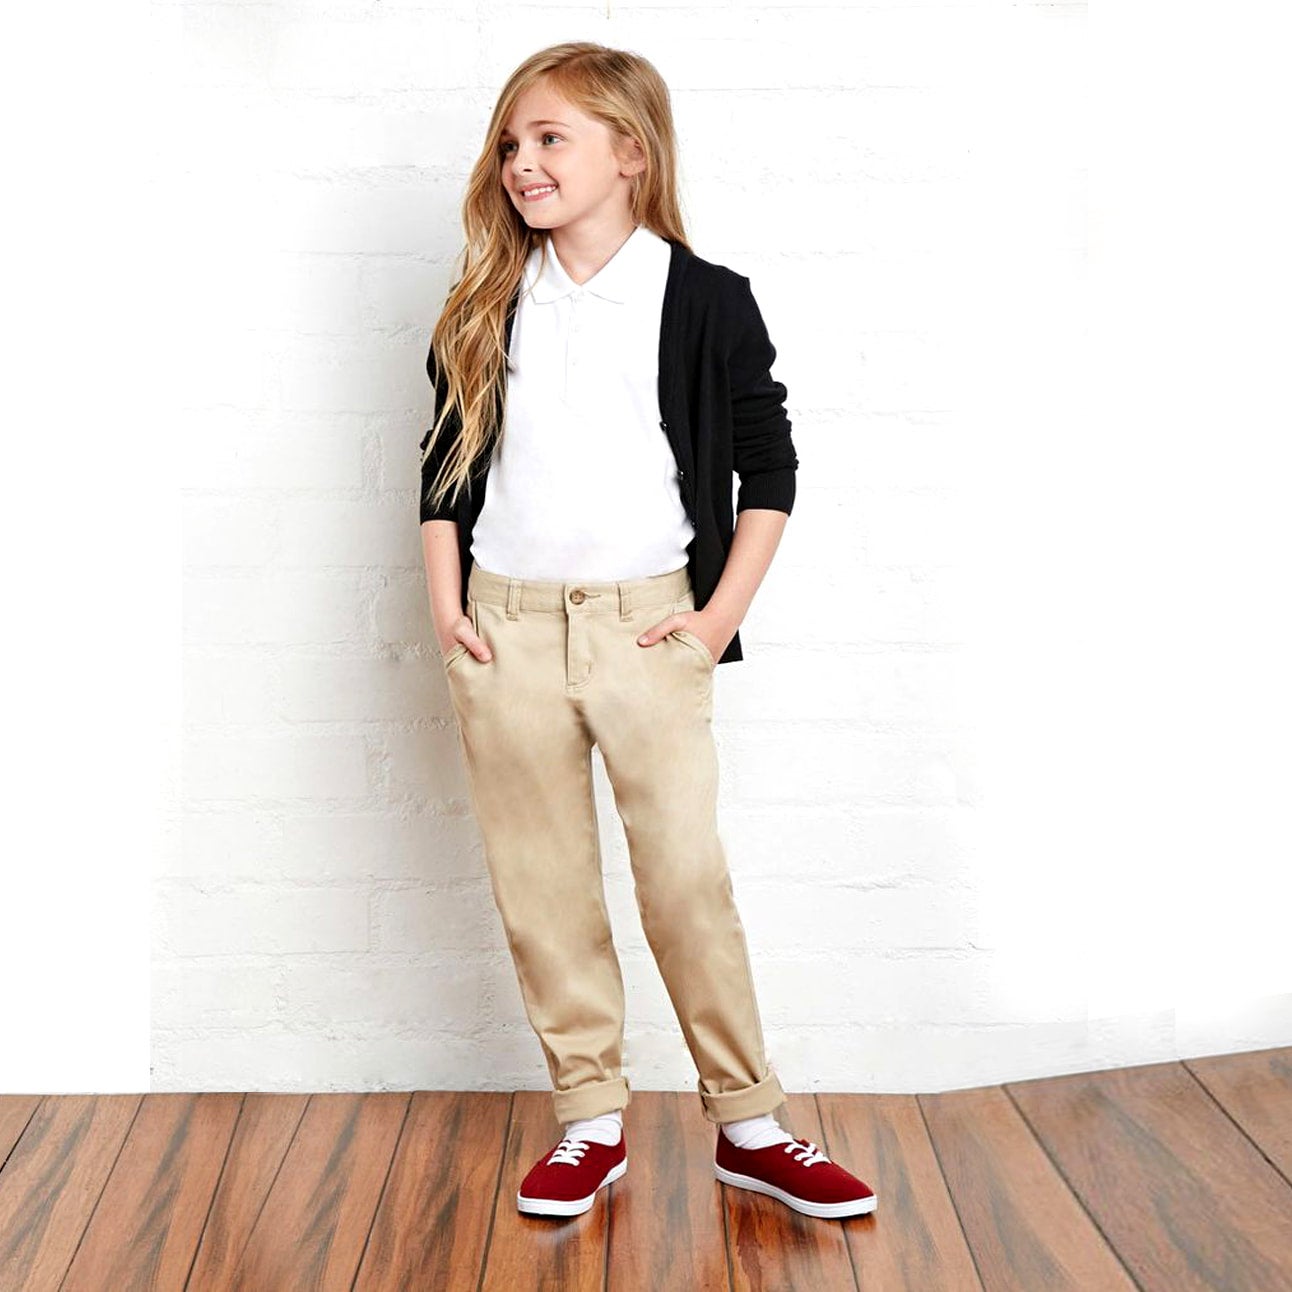 Khaki Pants for School Uniforms Kids Stretch Twill Skinny Leg Pant